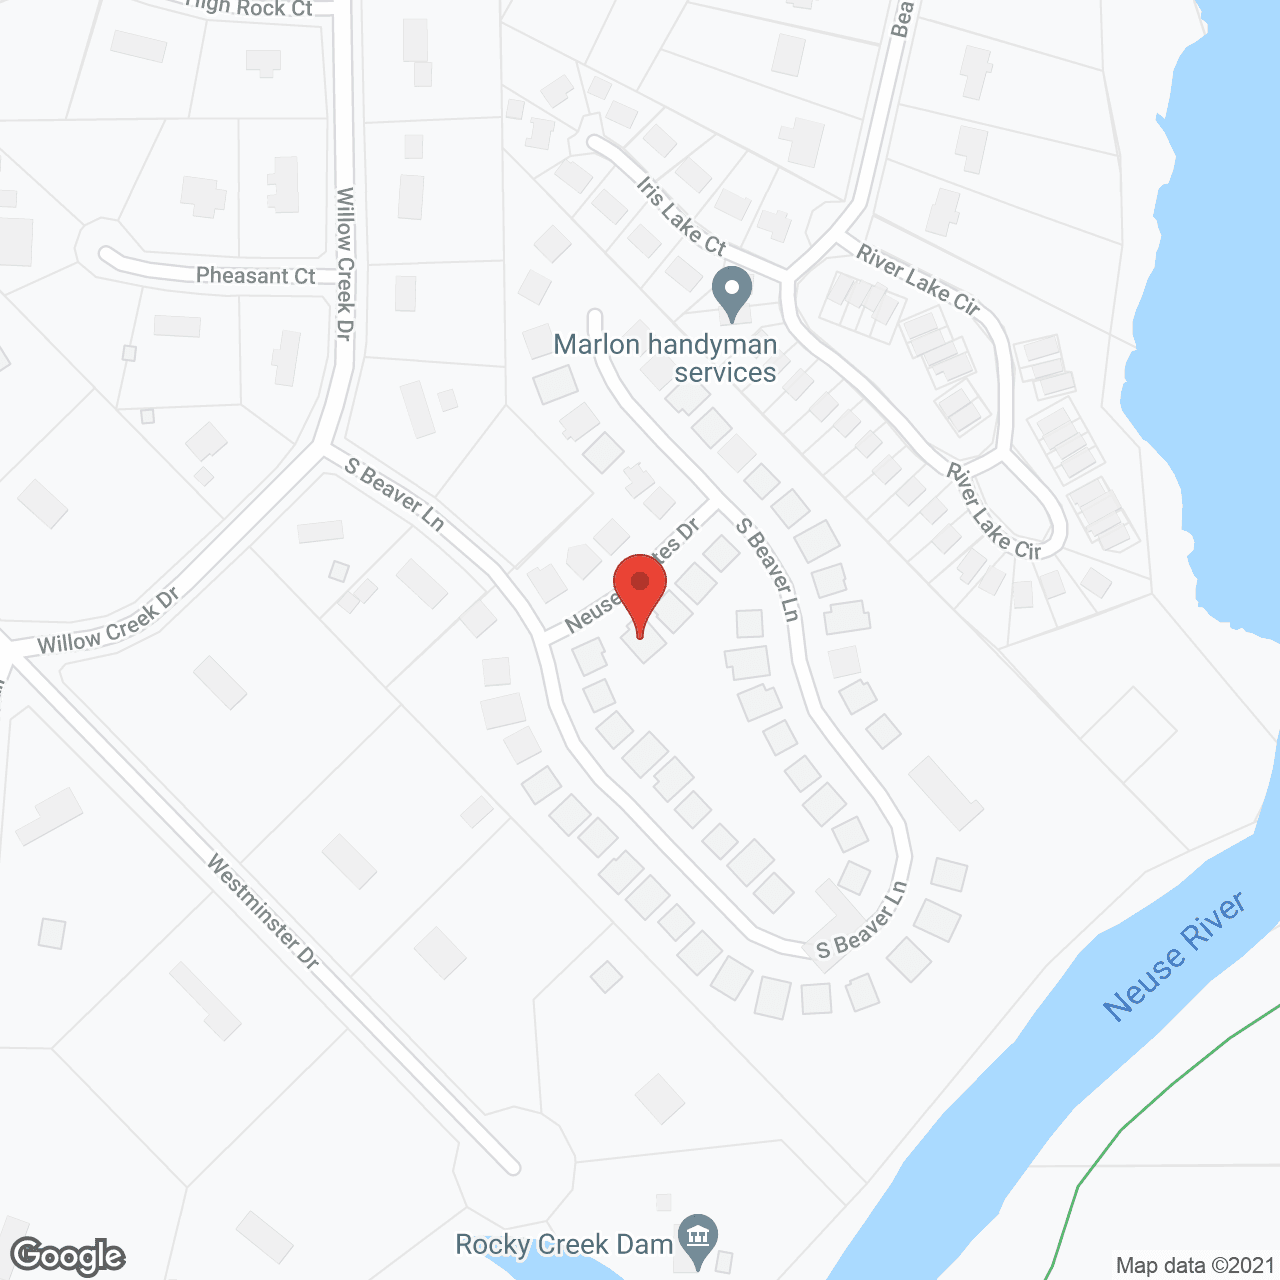 Renaissance Care Home at Neuse River Estates in google map